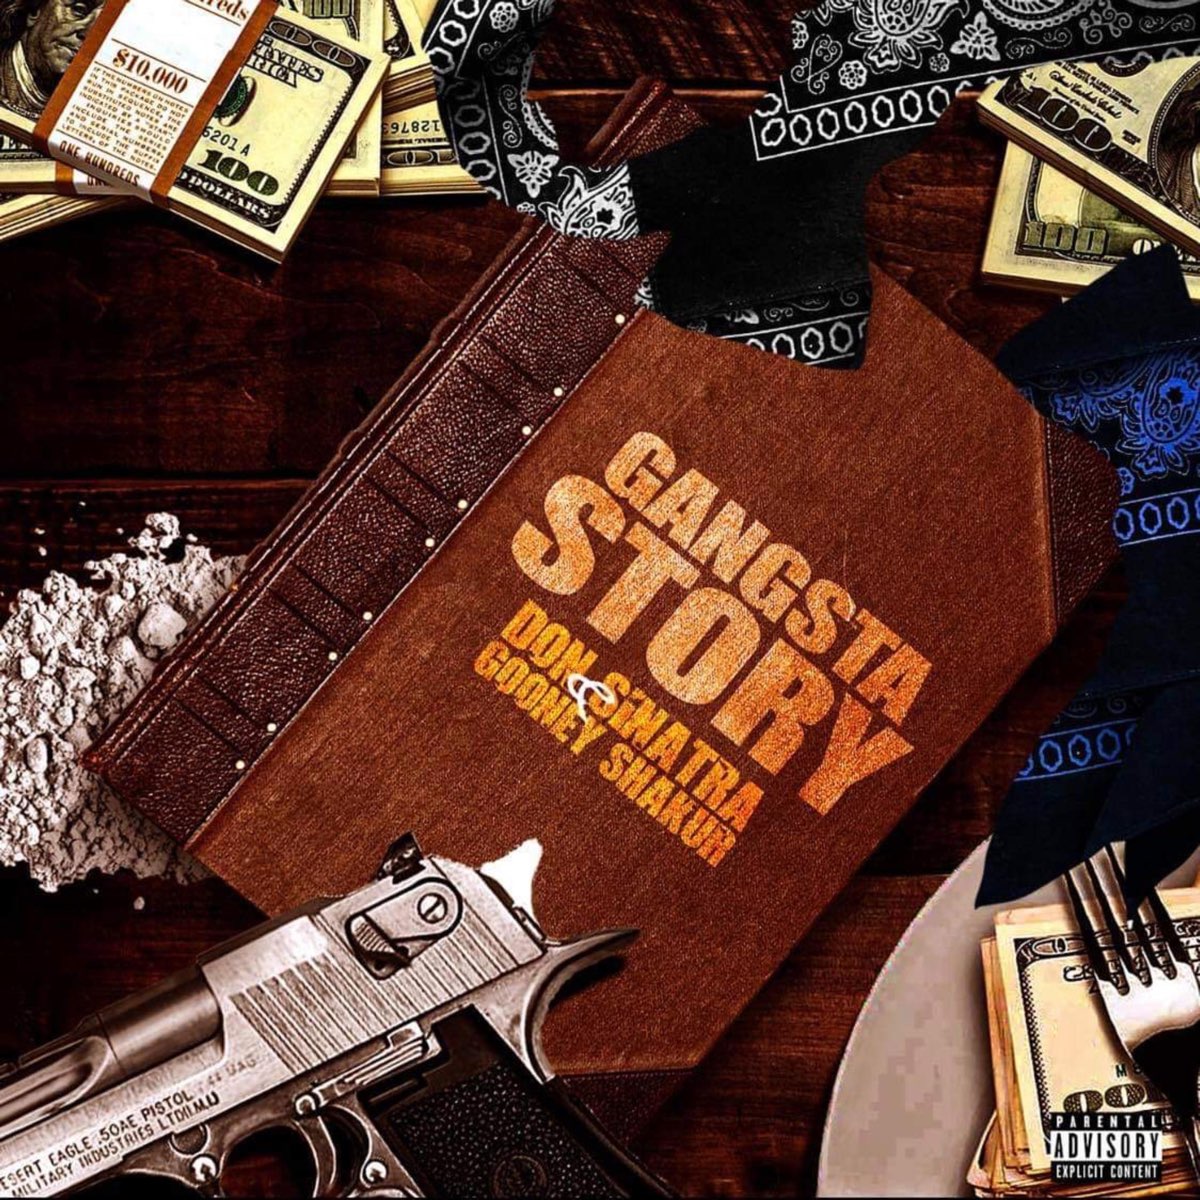 Gooney Shakur: albums, songs, playlists